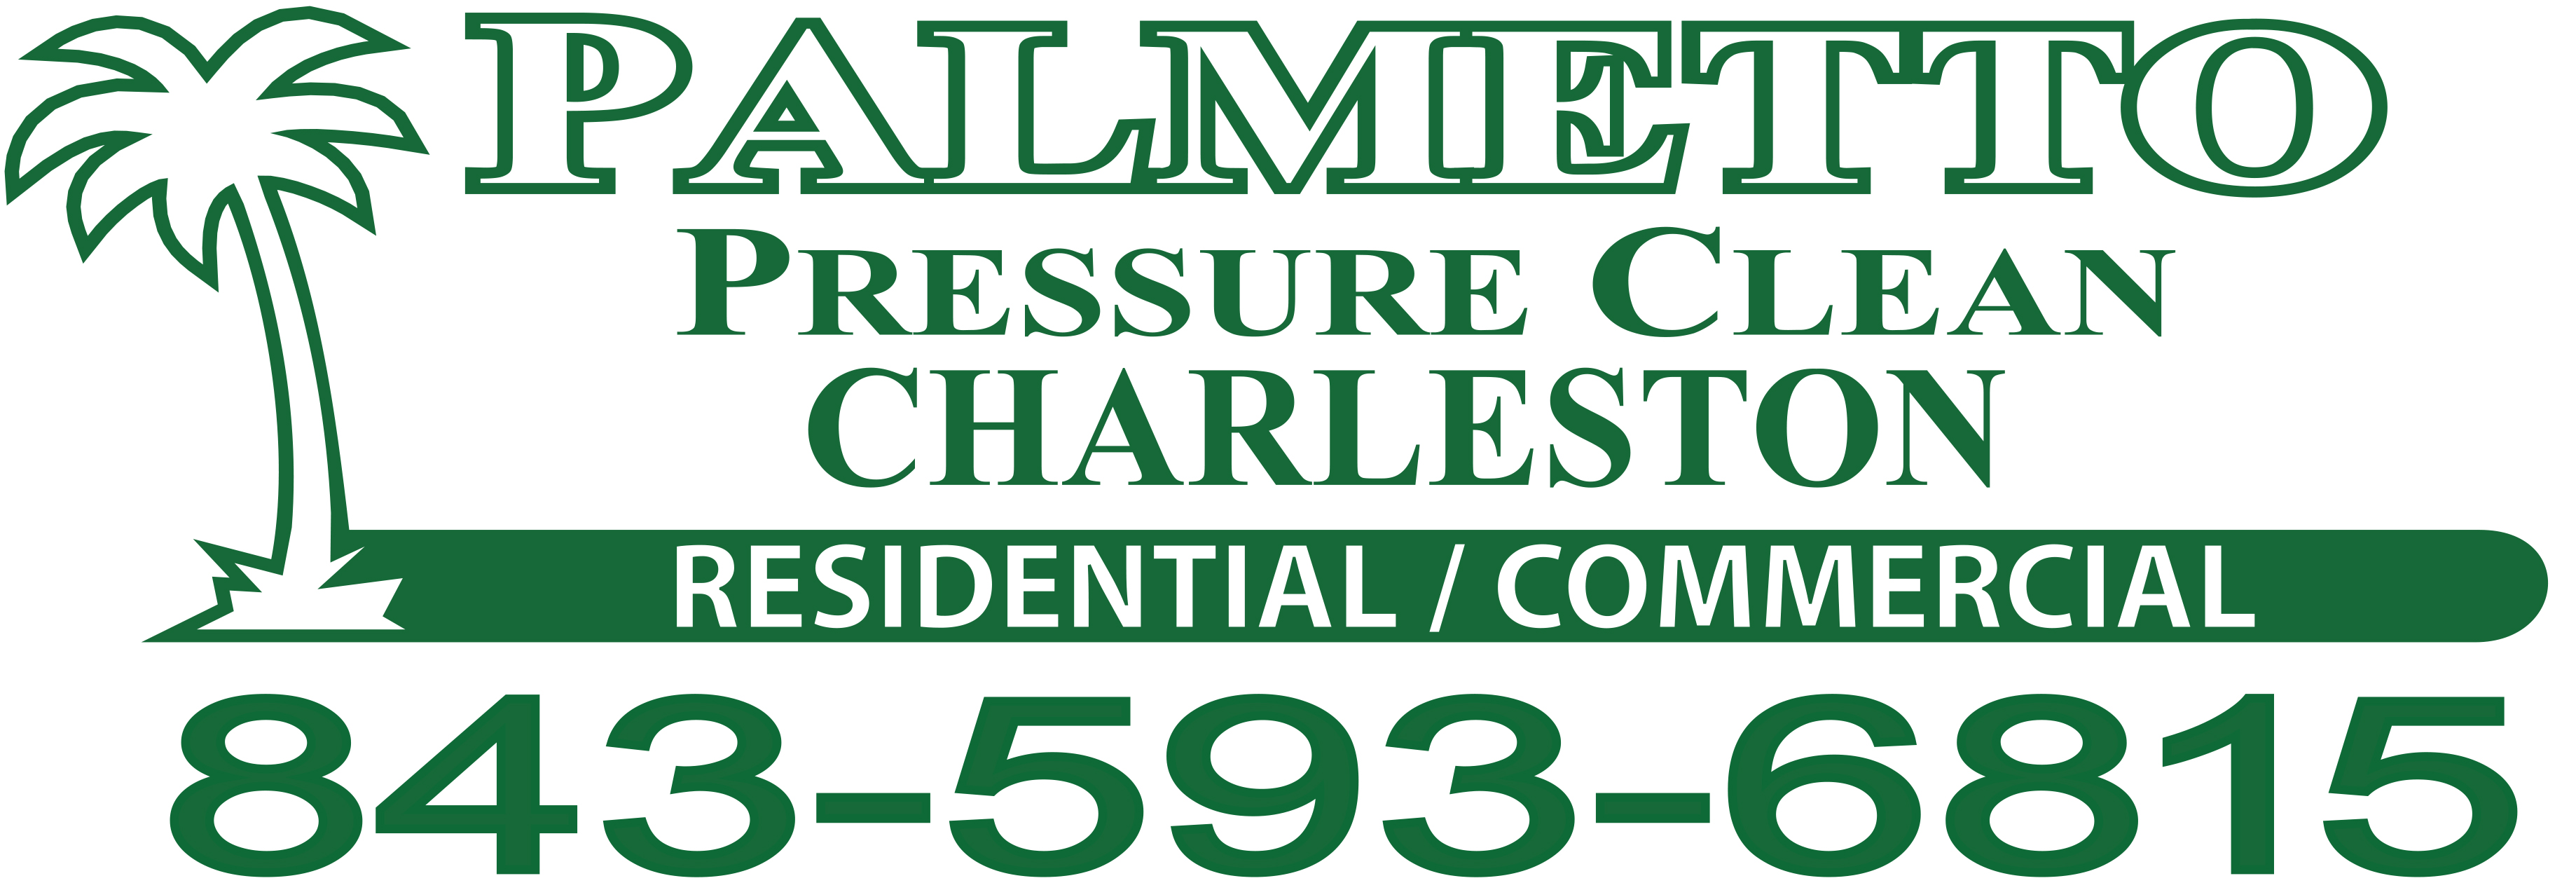 Palmetto Pressure Clean Charleston, LLC Logo